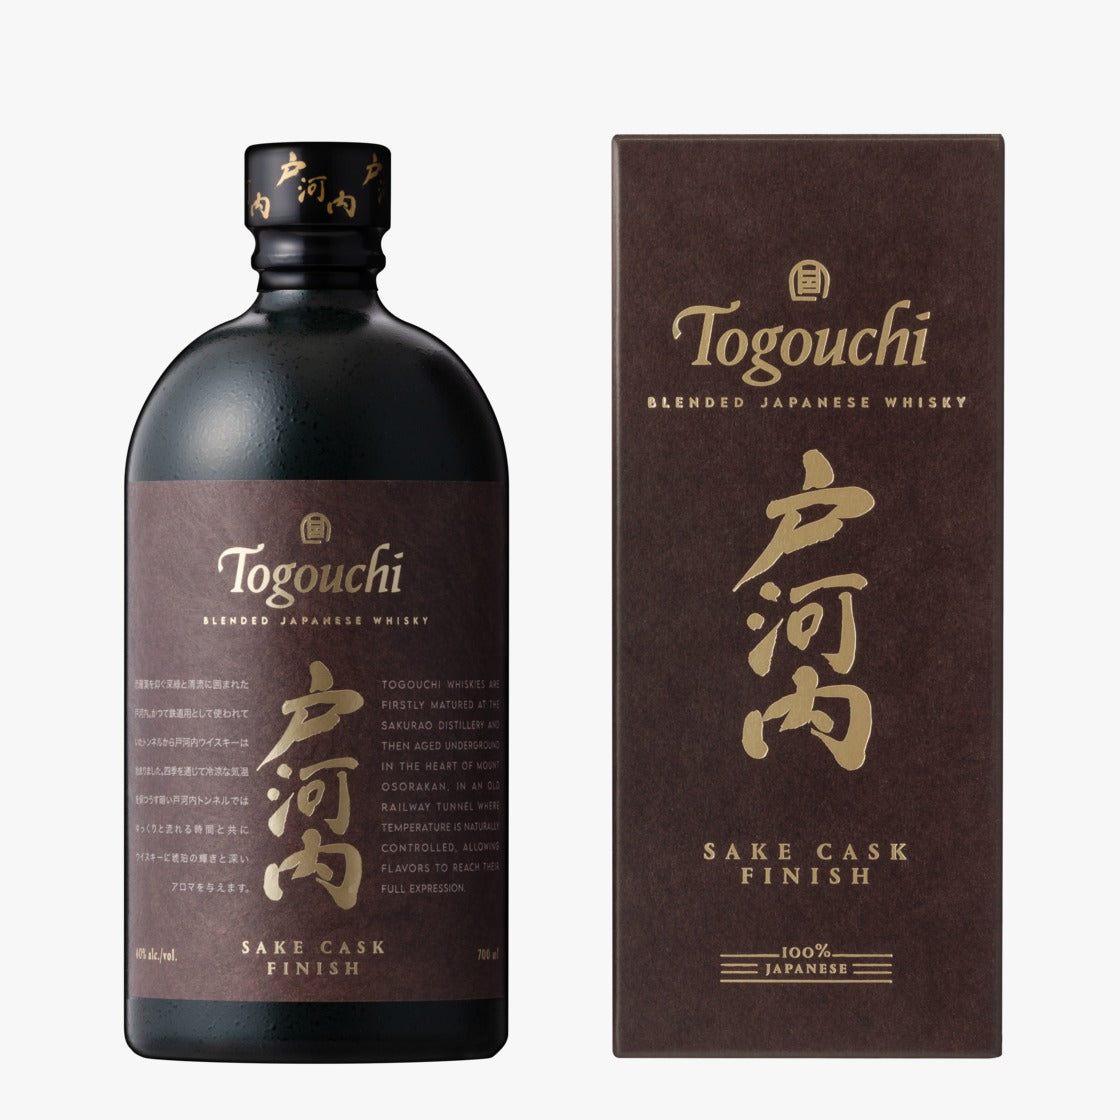 Togouchi Saké Cask Finish 40% 70cl whisky Togouchi 999 Blended Togouchi